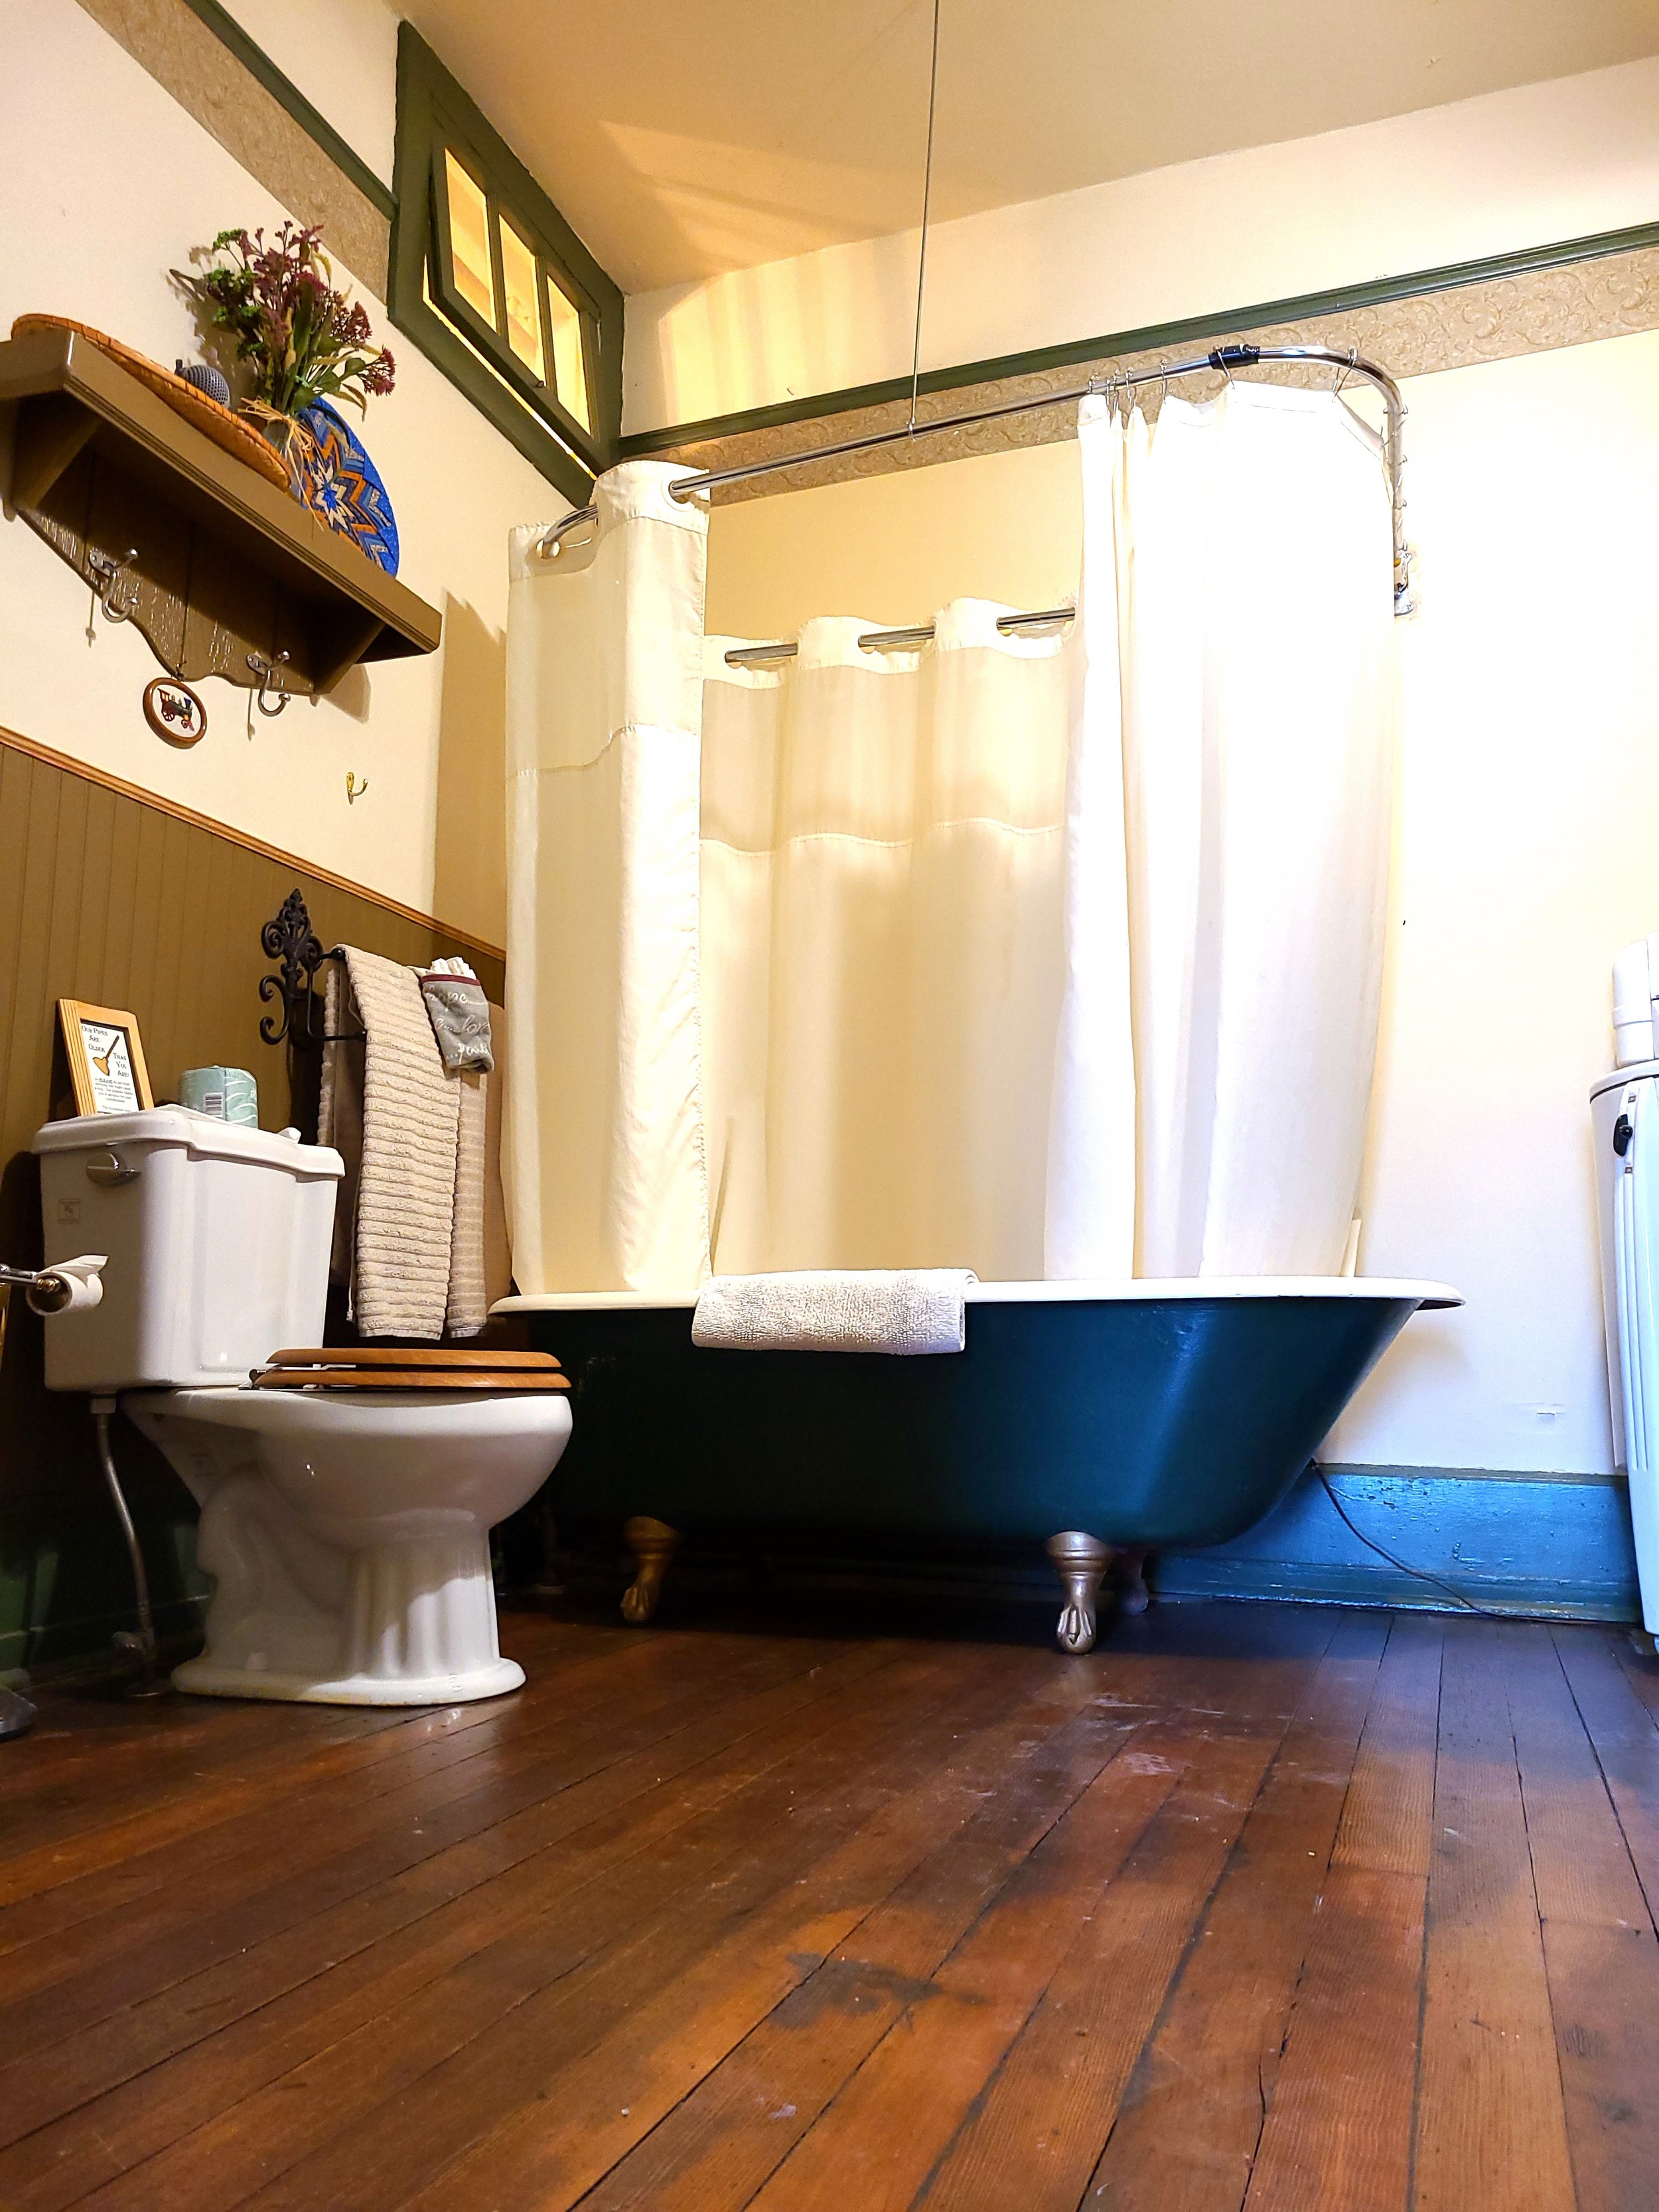 bunkhouse-bathroom.jpg